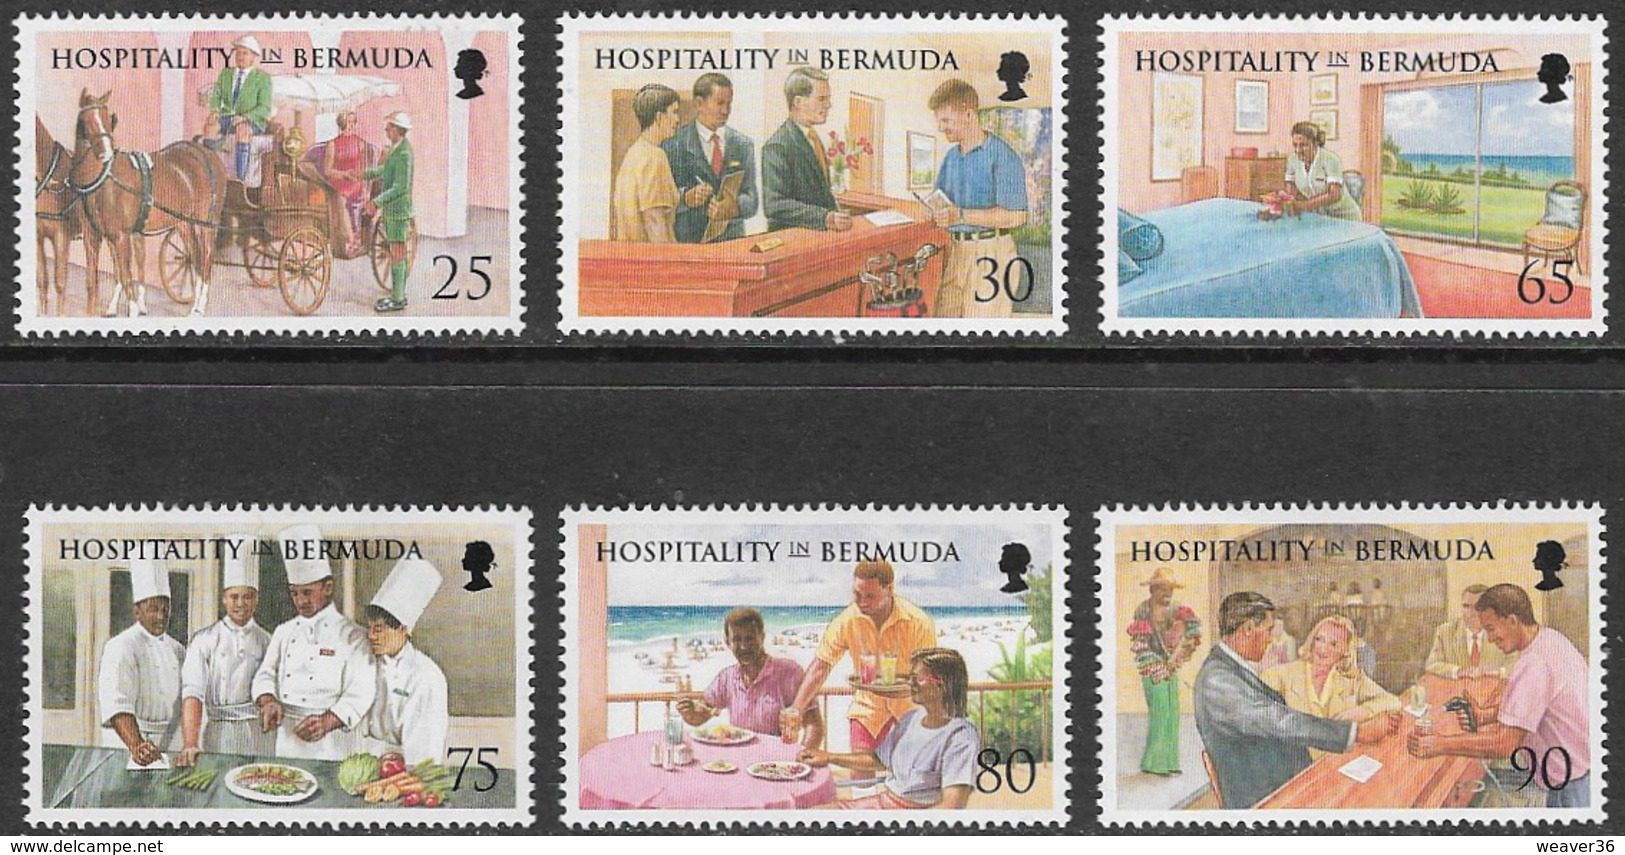 Bermuda SG809-814 1998 Hospitality In Bermuda Set 6v Complete Unmounted Mint [34/28871/2D] - Bermudes